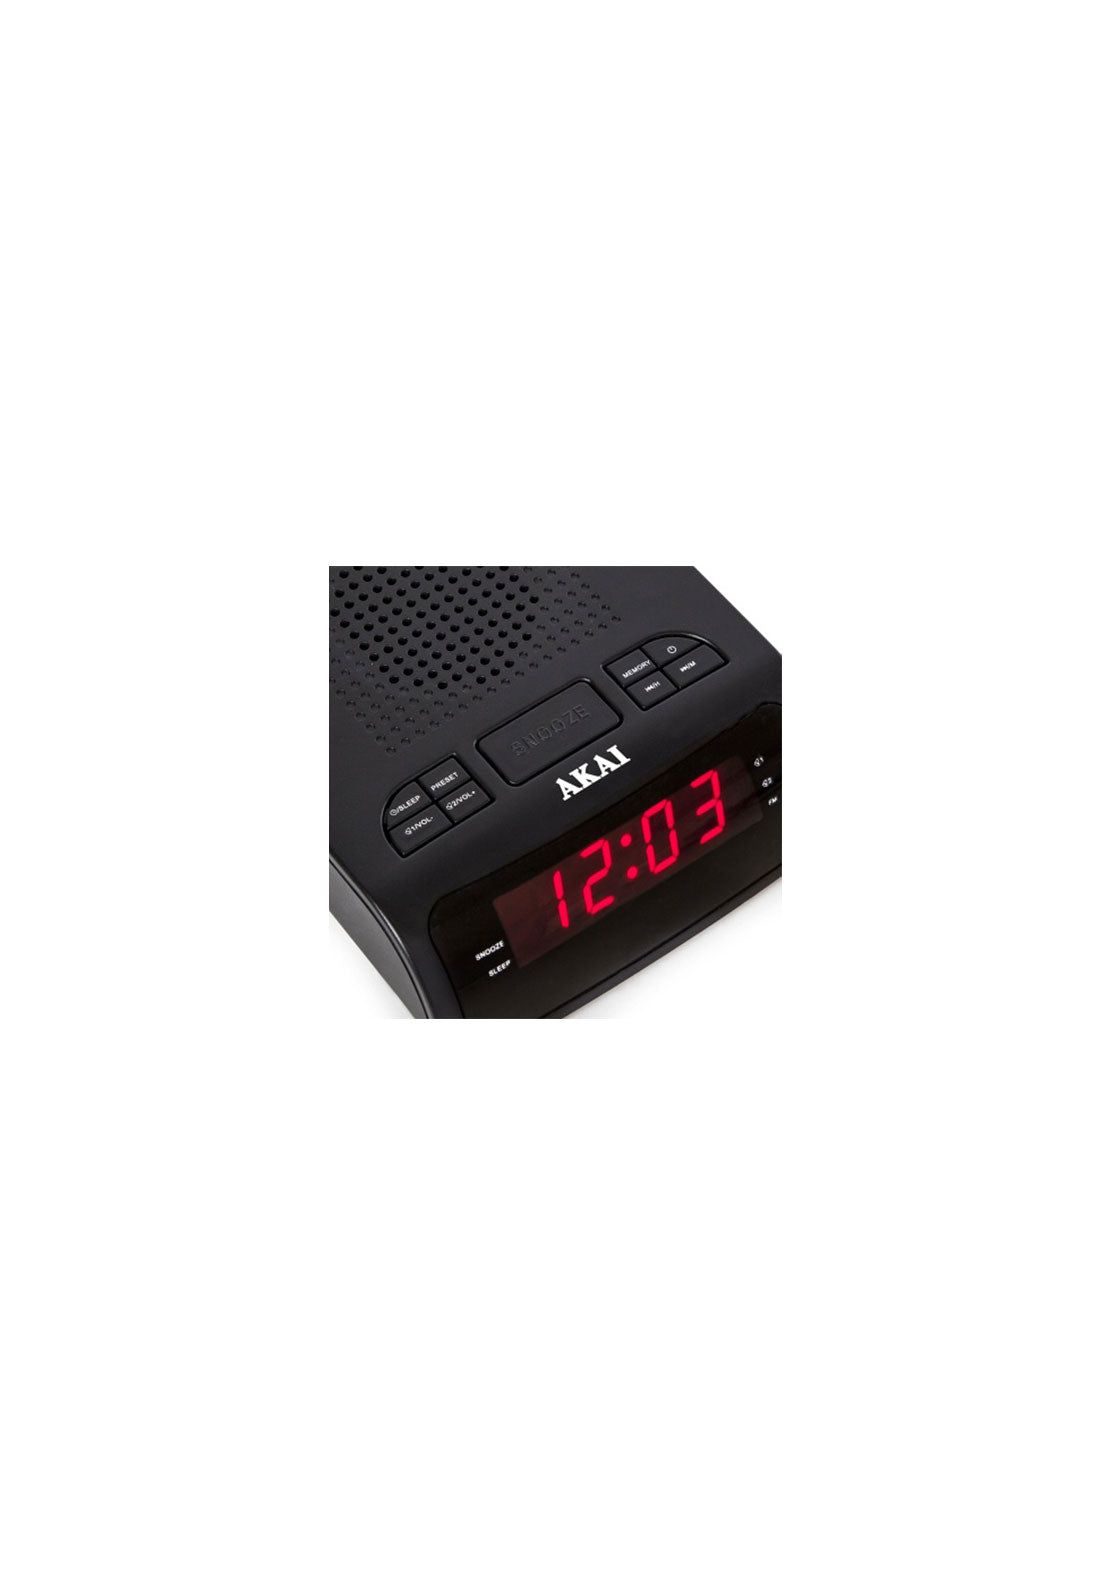 Akai Am/Fm Alarm Clock Radio With Led Display | A61020 - Black 3 Shaws Department Stores